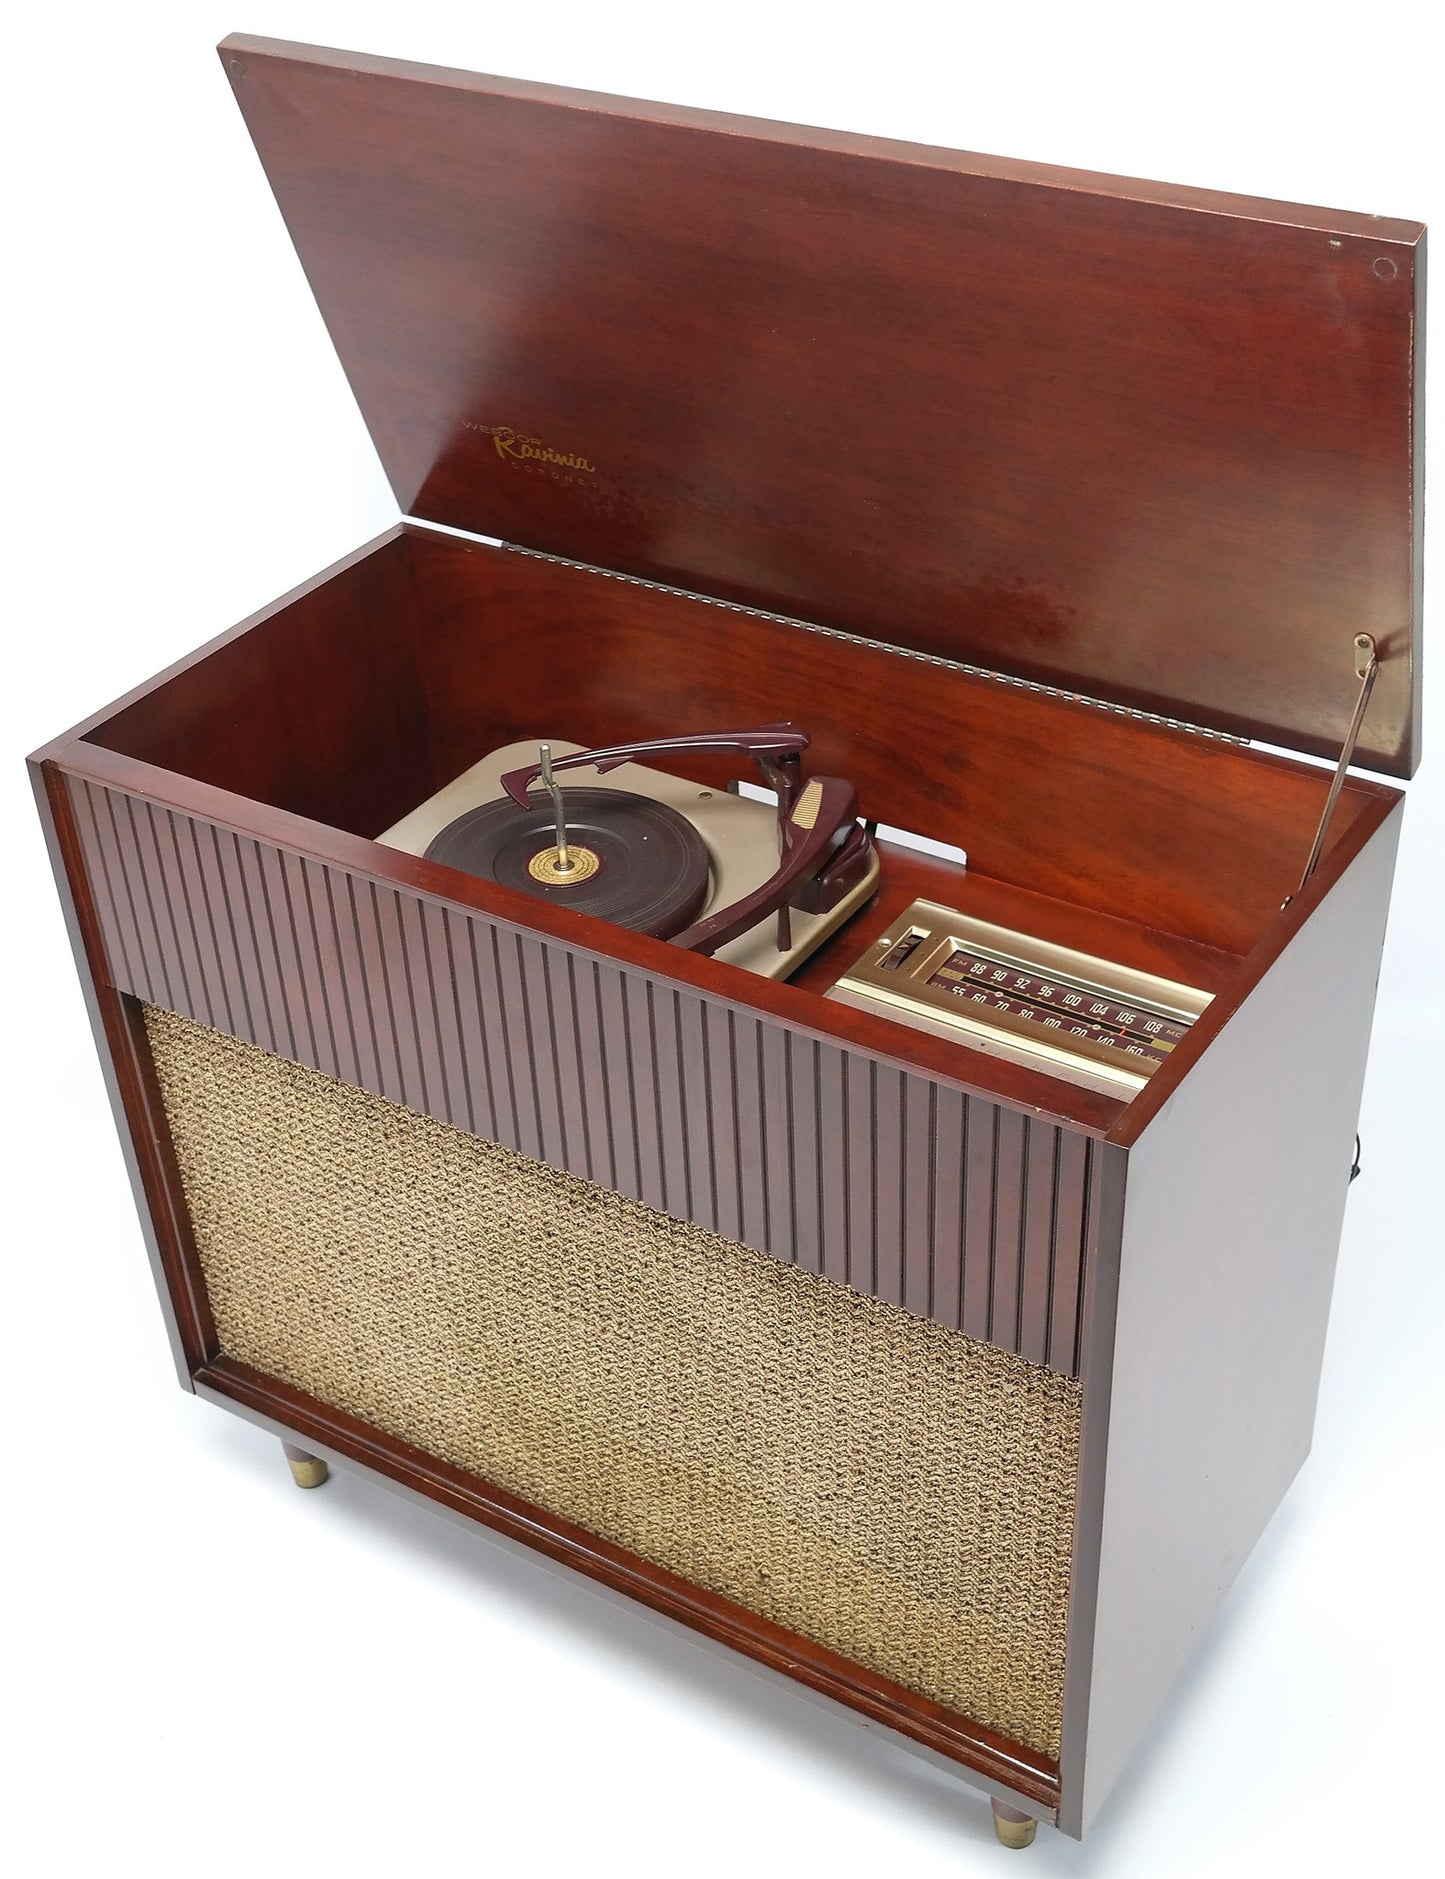 Mid Century Modern STEREO CONSOLE - 50's - Mid Century Webcor Ravinia Coronet Record Player - Bluetooth - AM FM The Vintedge Co.